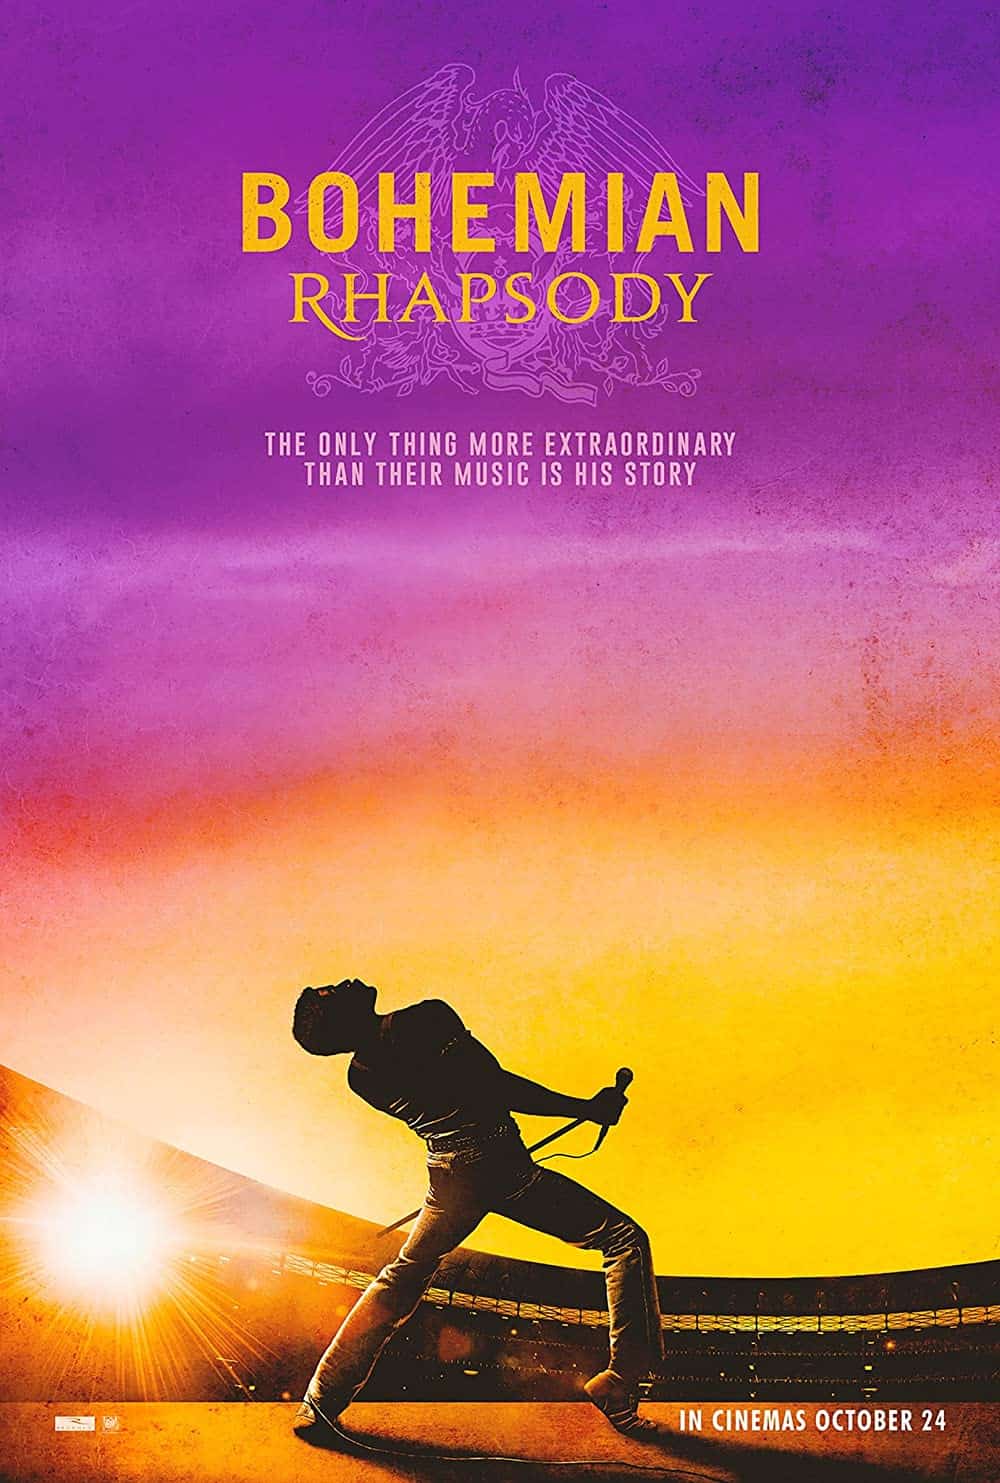 Bohemian Rhapsody (2018) Best Rock Movies to Watch